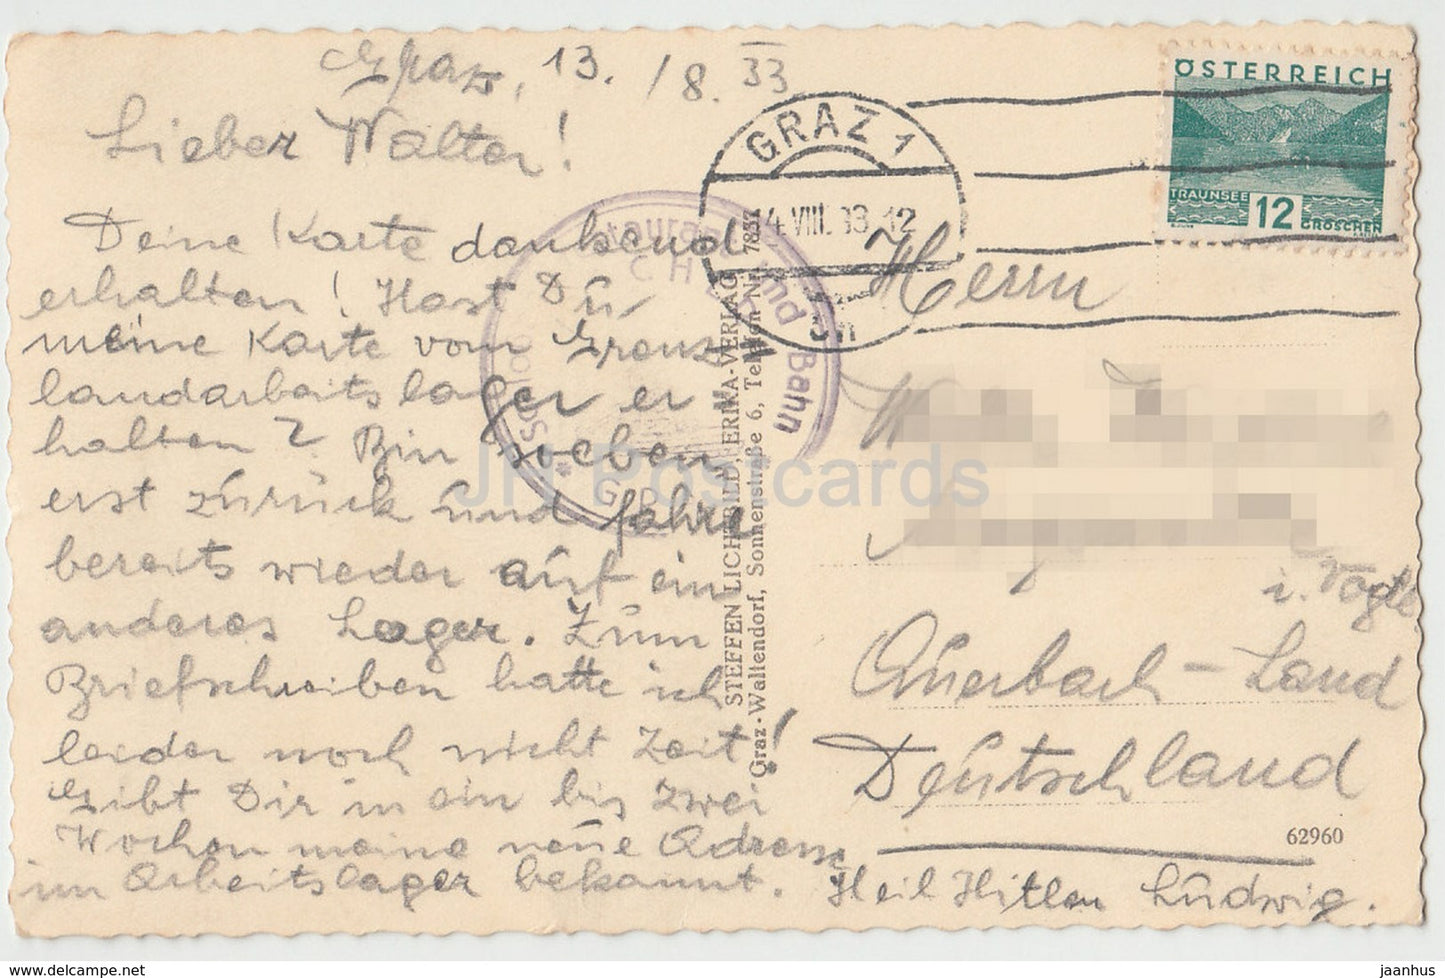 Graz - Hackherdenkmal am Schlossberg - 453 - 1933 - old postcard - Austria - used